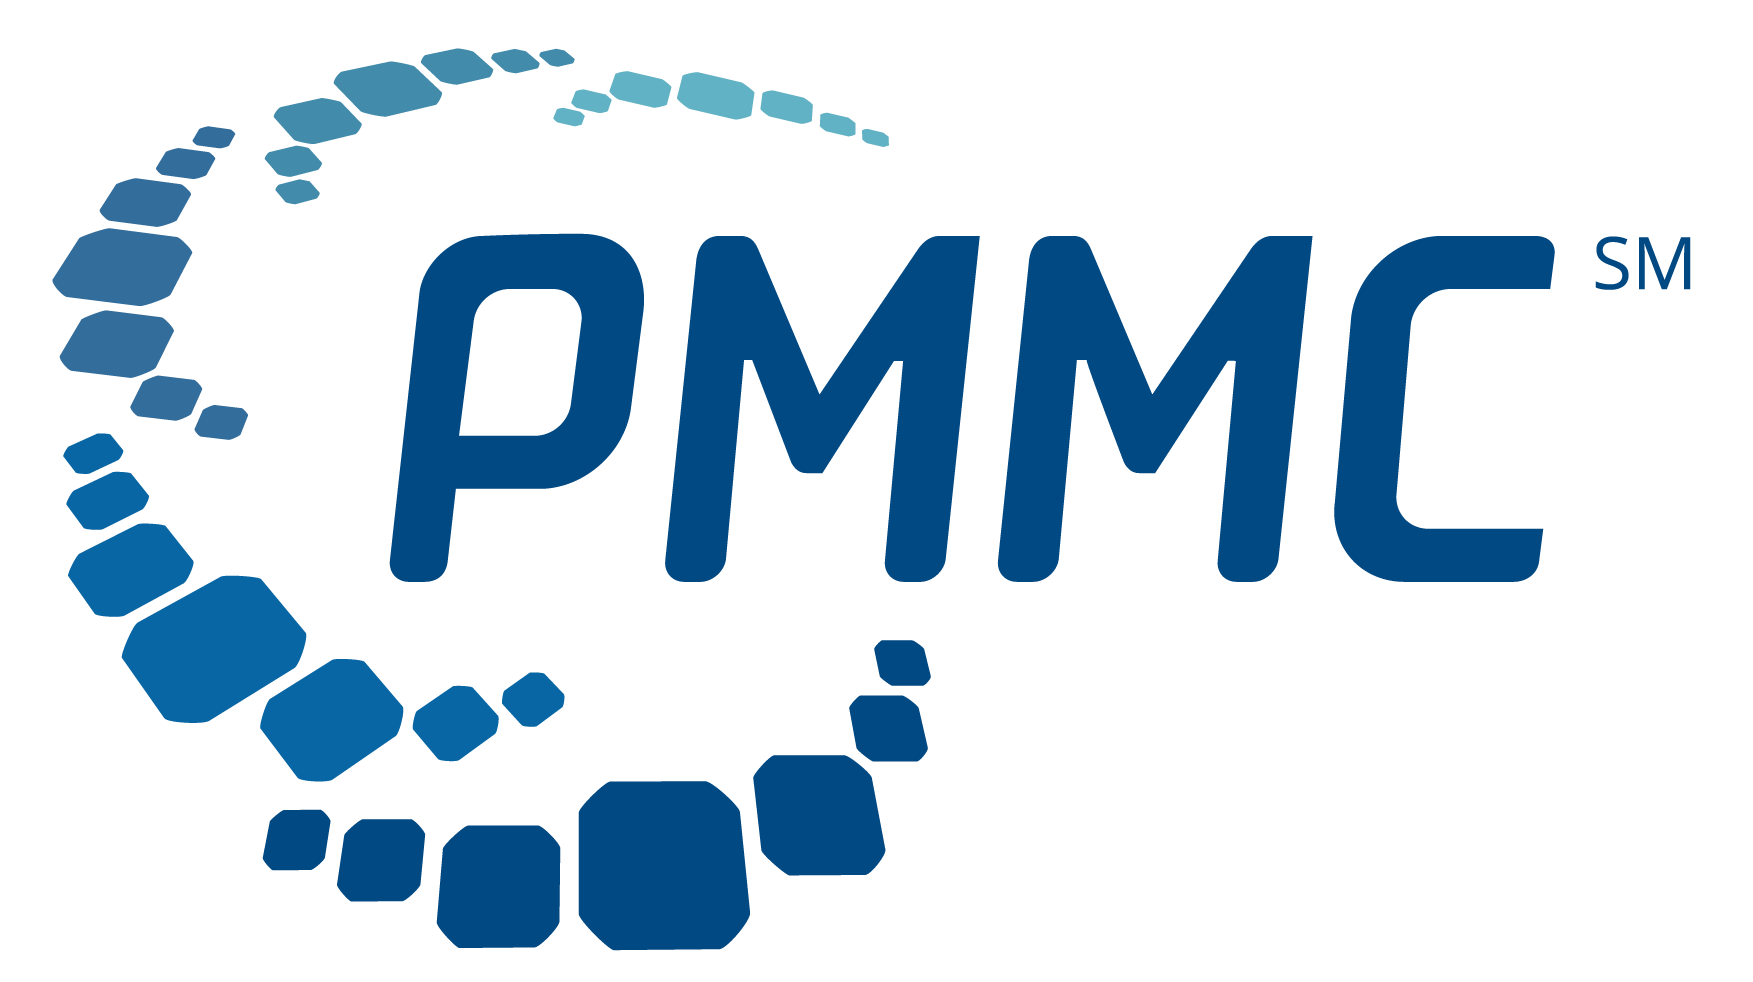 PMMC regains application knowledge and accelerates modernization for cloud